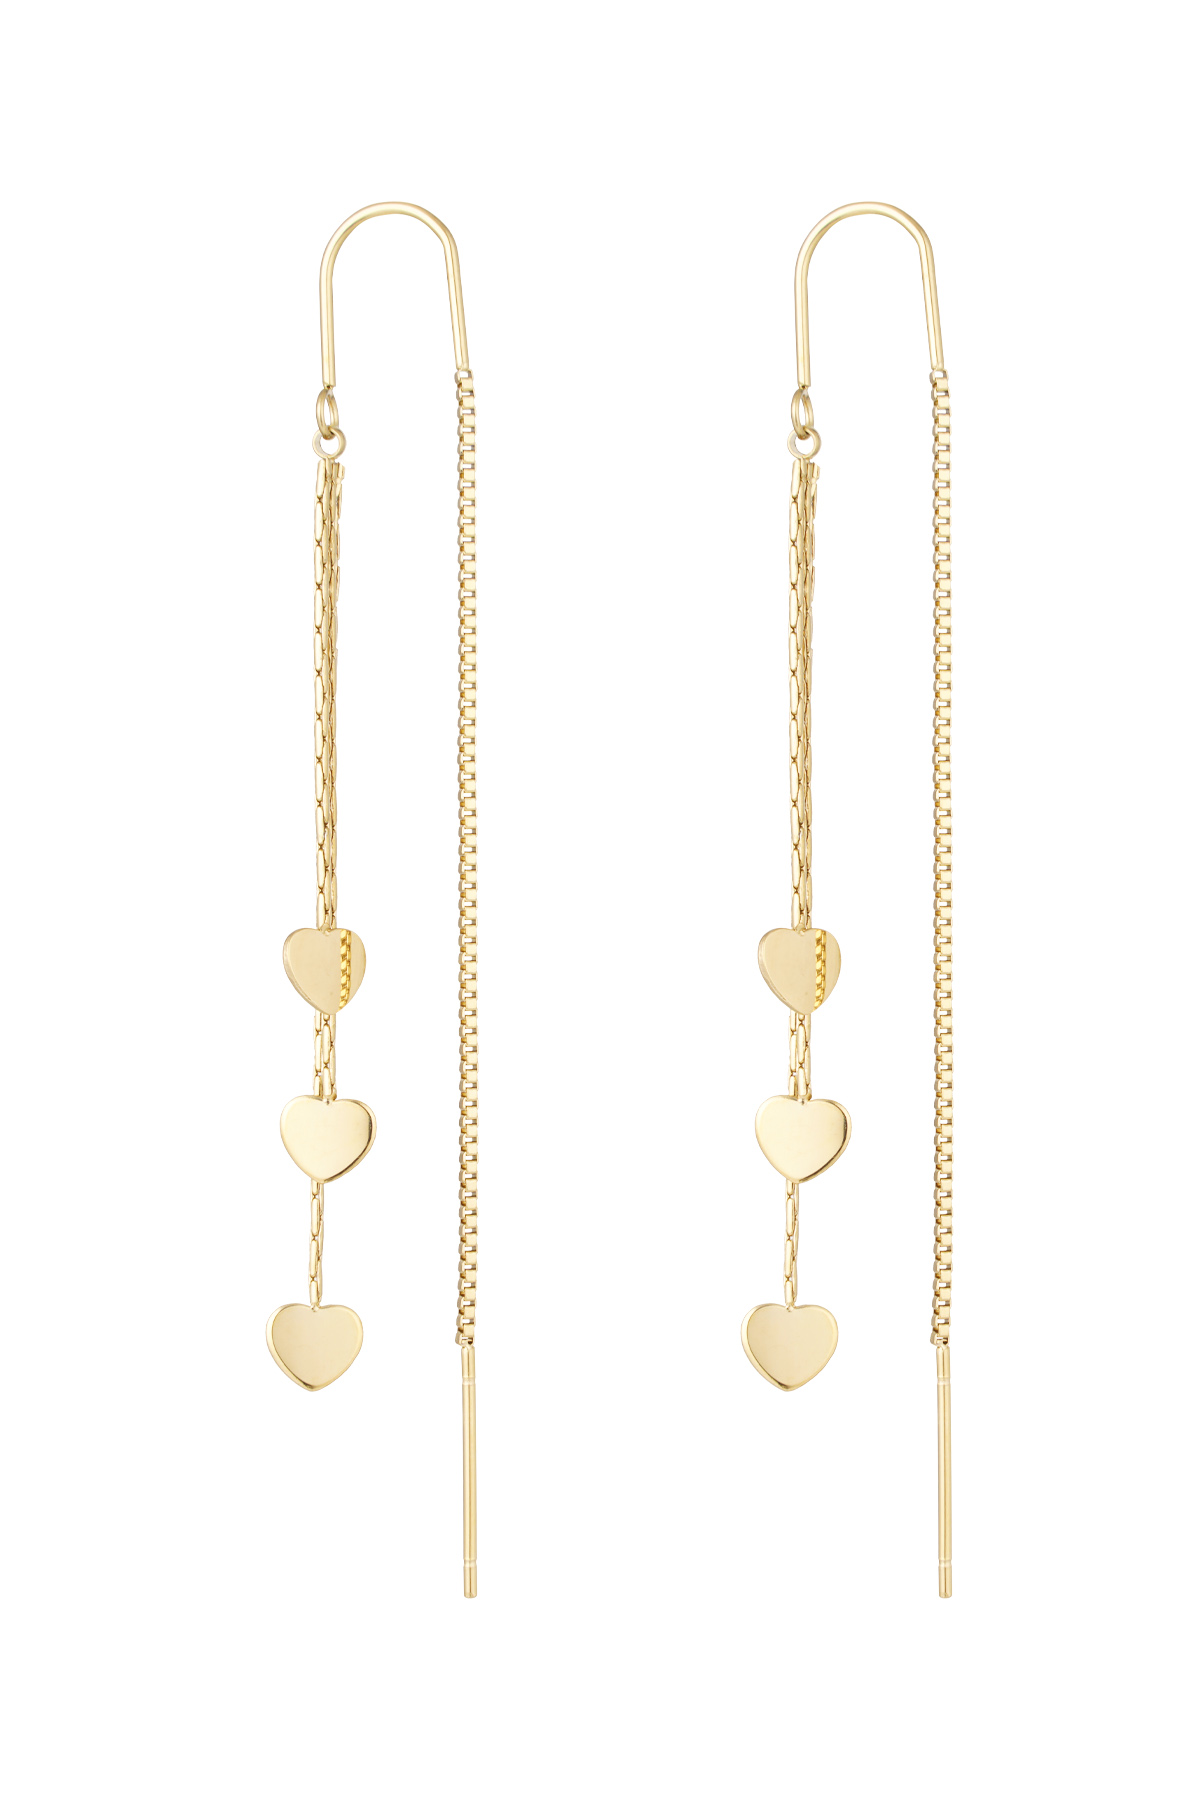 Hanging earrings 3 x hearts - gold